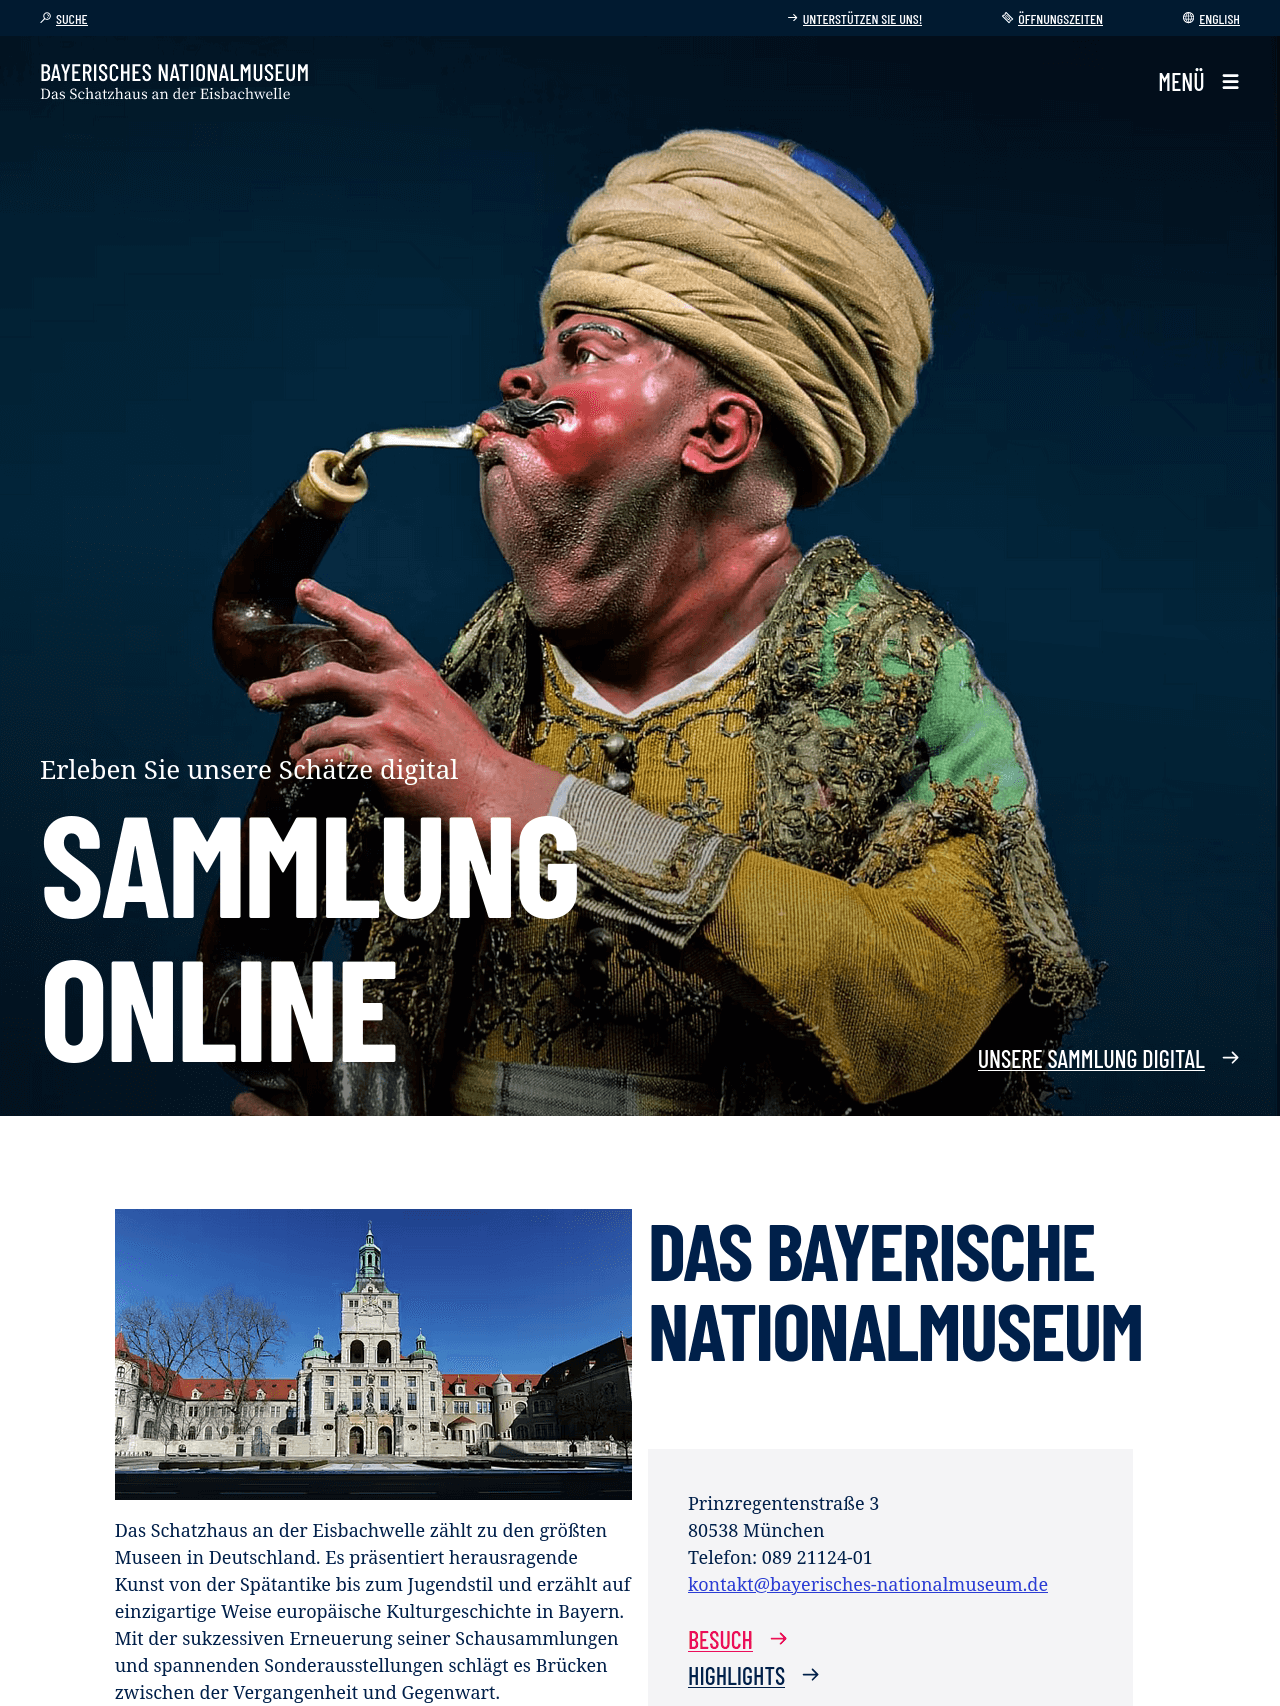 Screenshot of the Bayerische Nationalmuseum website